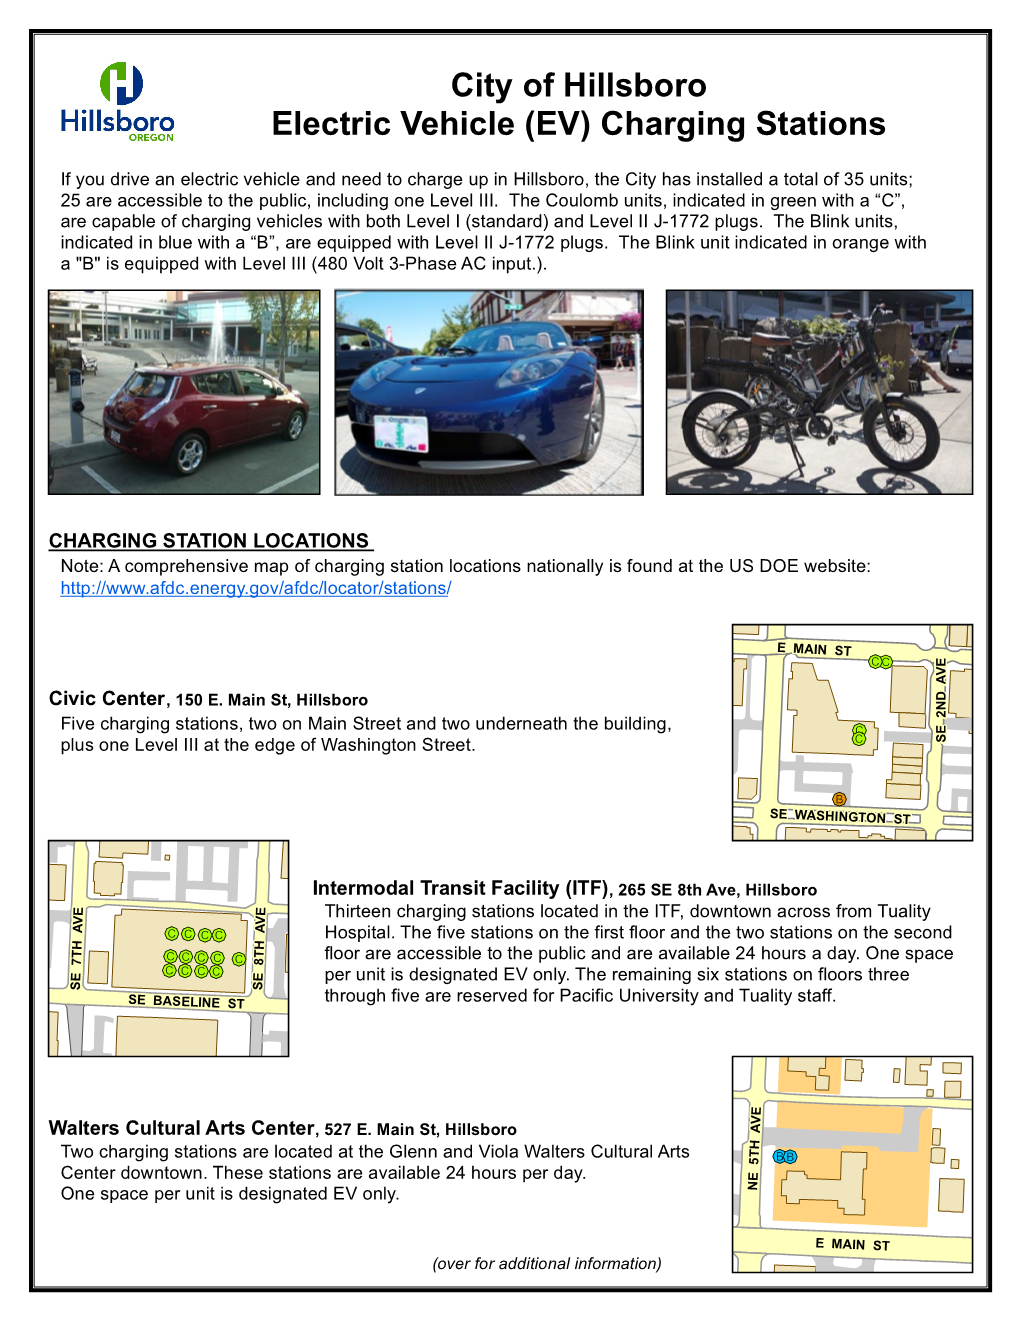 City of Hillsboro Electric Vehicle (EV) Charging Stations